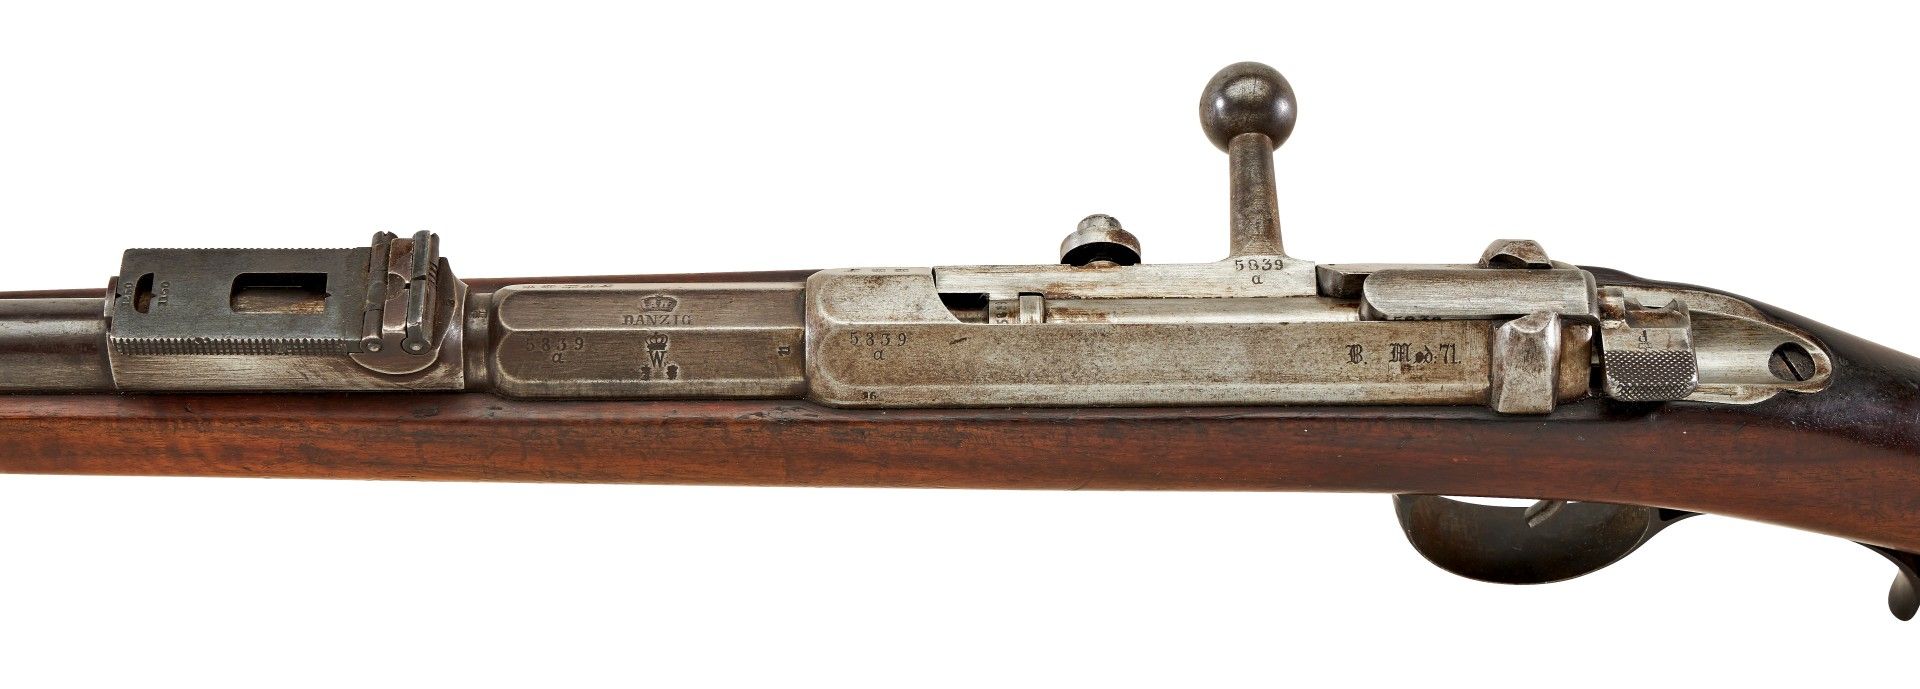 Jäger - Büchse M 71 Hersteller: Gewehrfabrik DANZIG Kal.: 11,15 x 60mm R S.Nr.: 5839 a nrgl. - Image 2 of 4